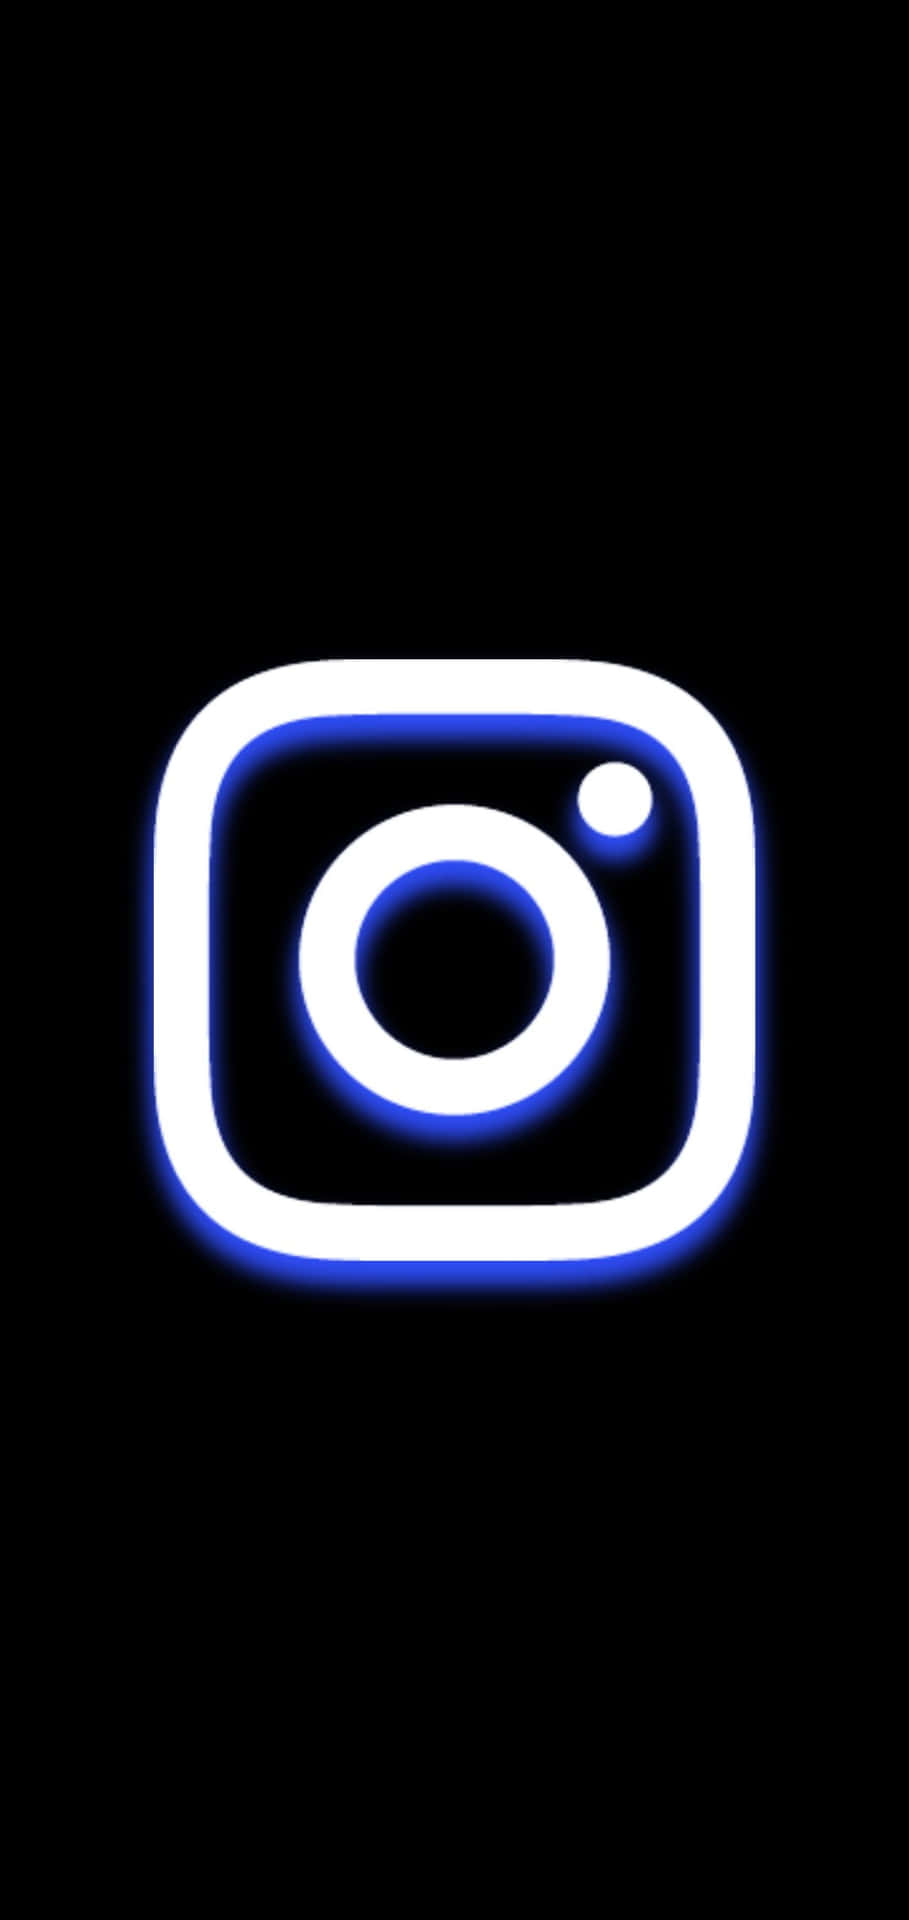 Instagram White And Blue Logo Black Background